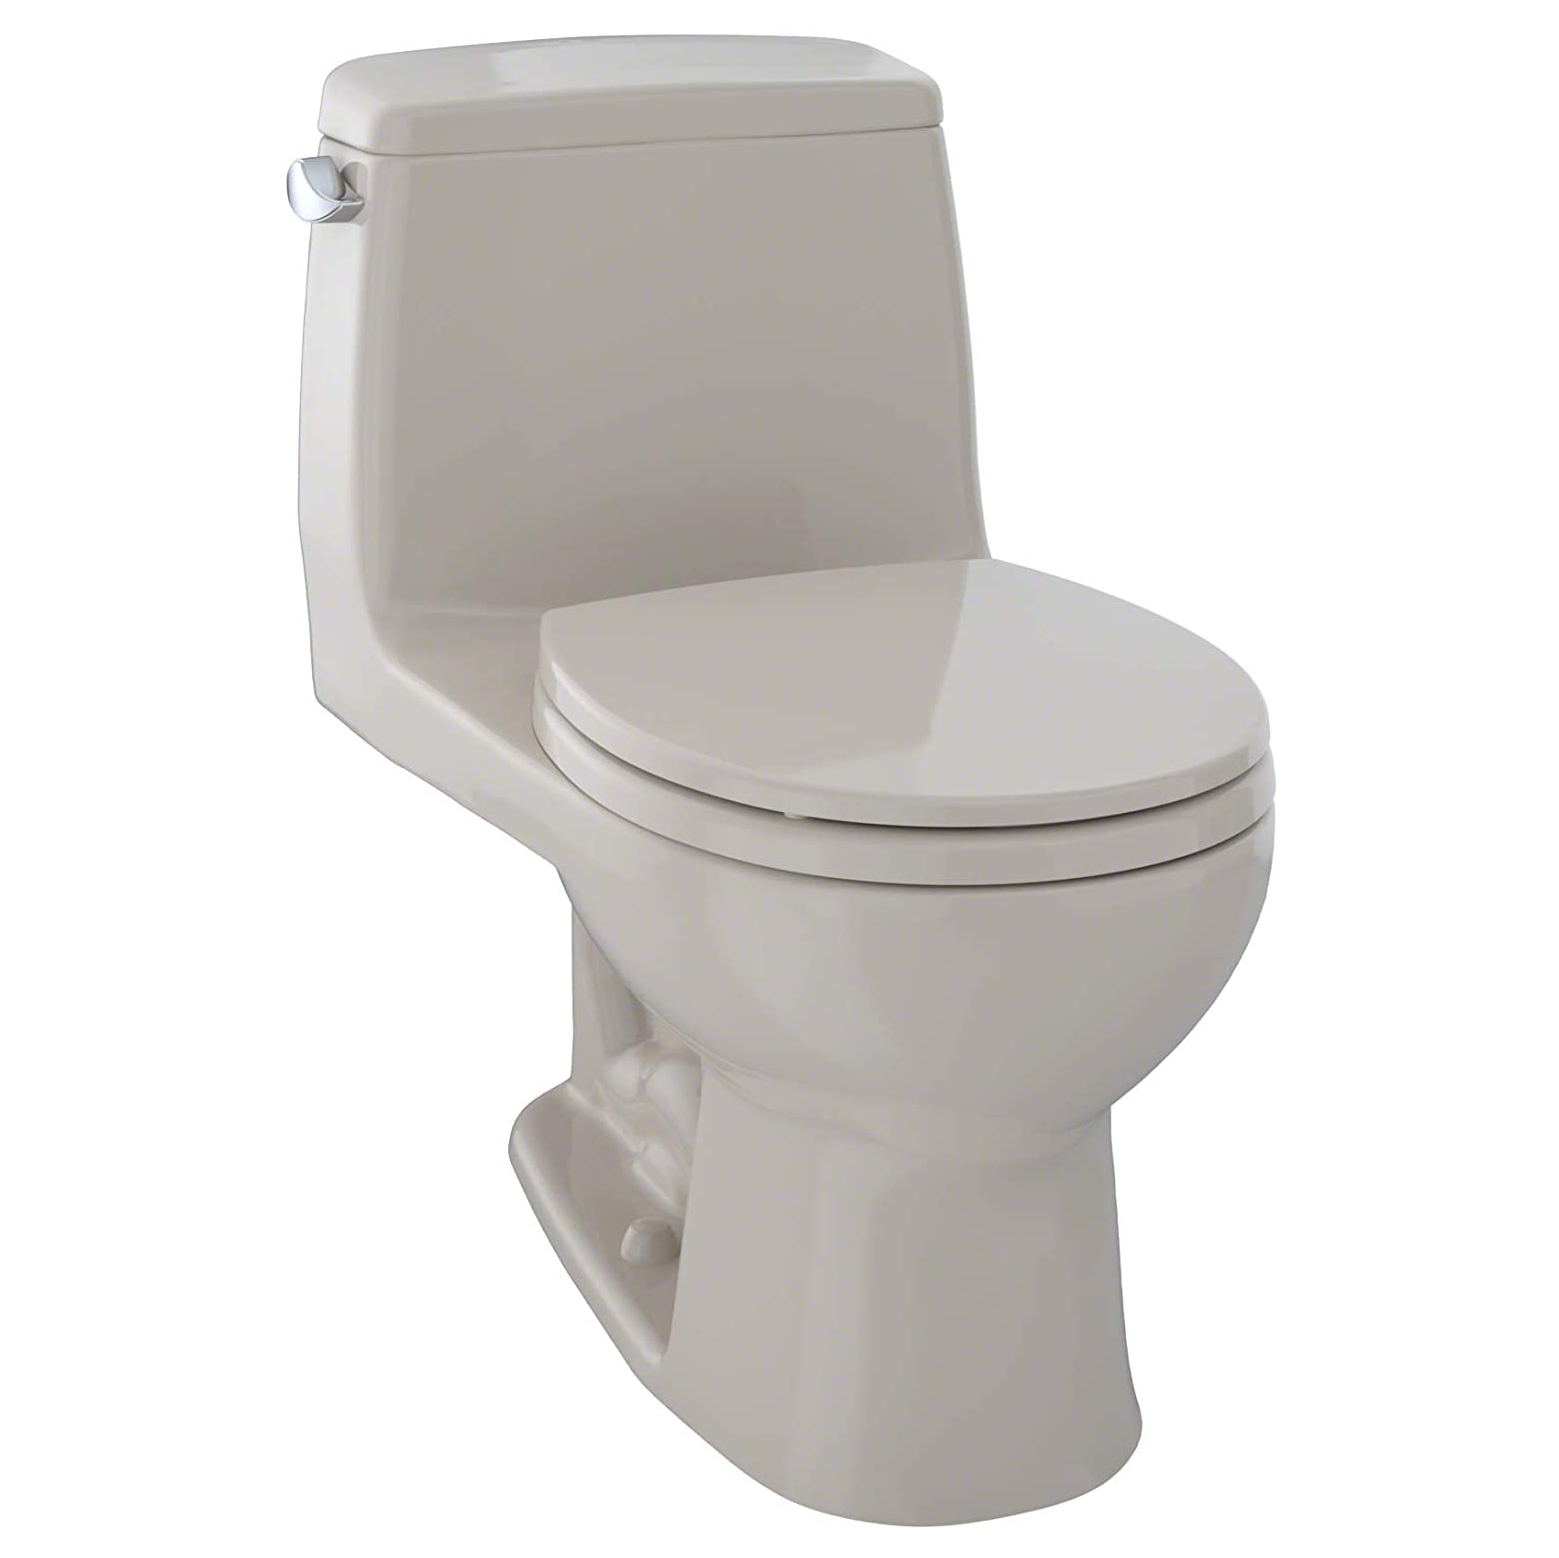 Ultramax 1-pc Round Front Toilet w/Seat in Bone 1.6 gpf